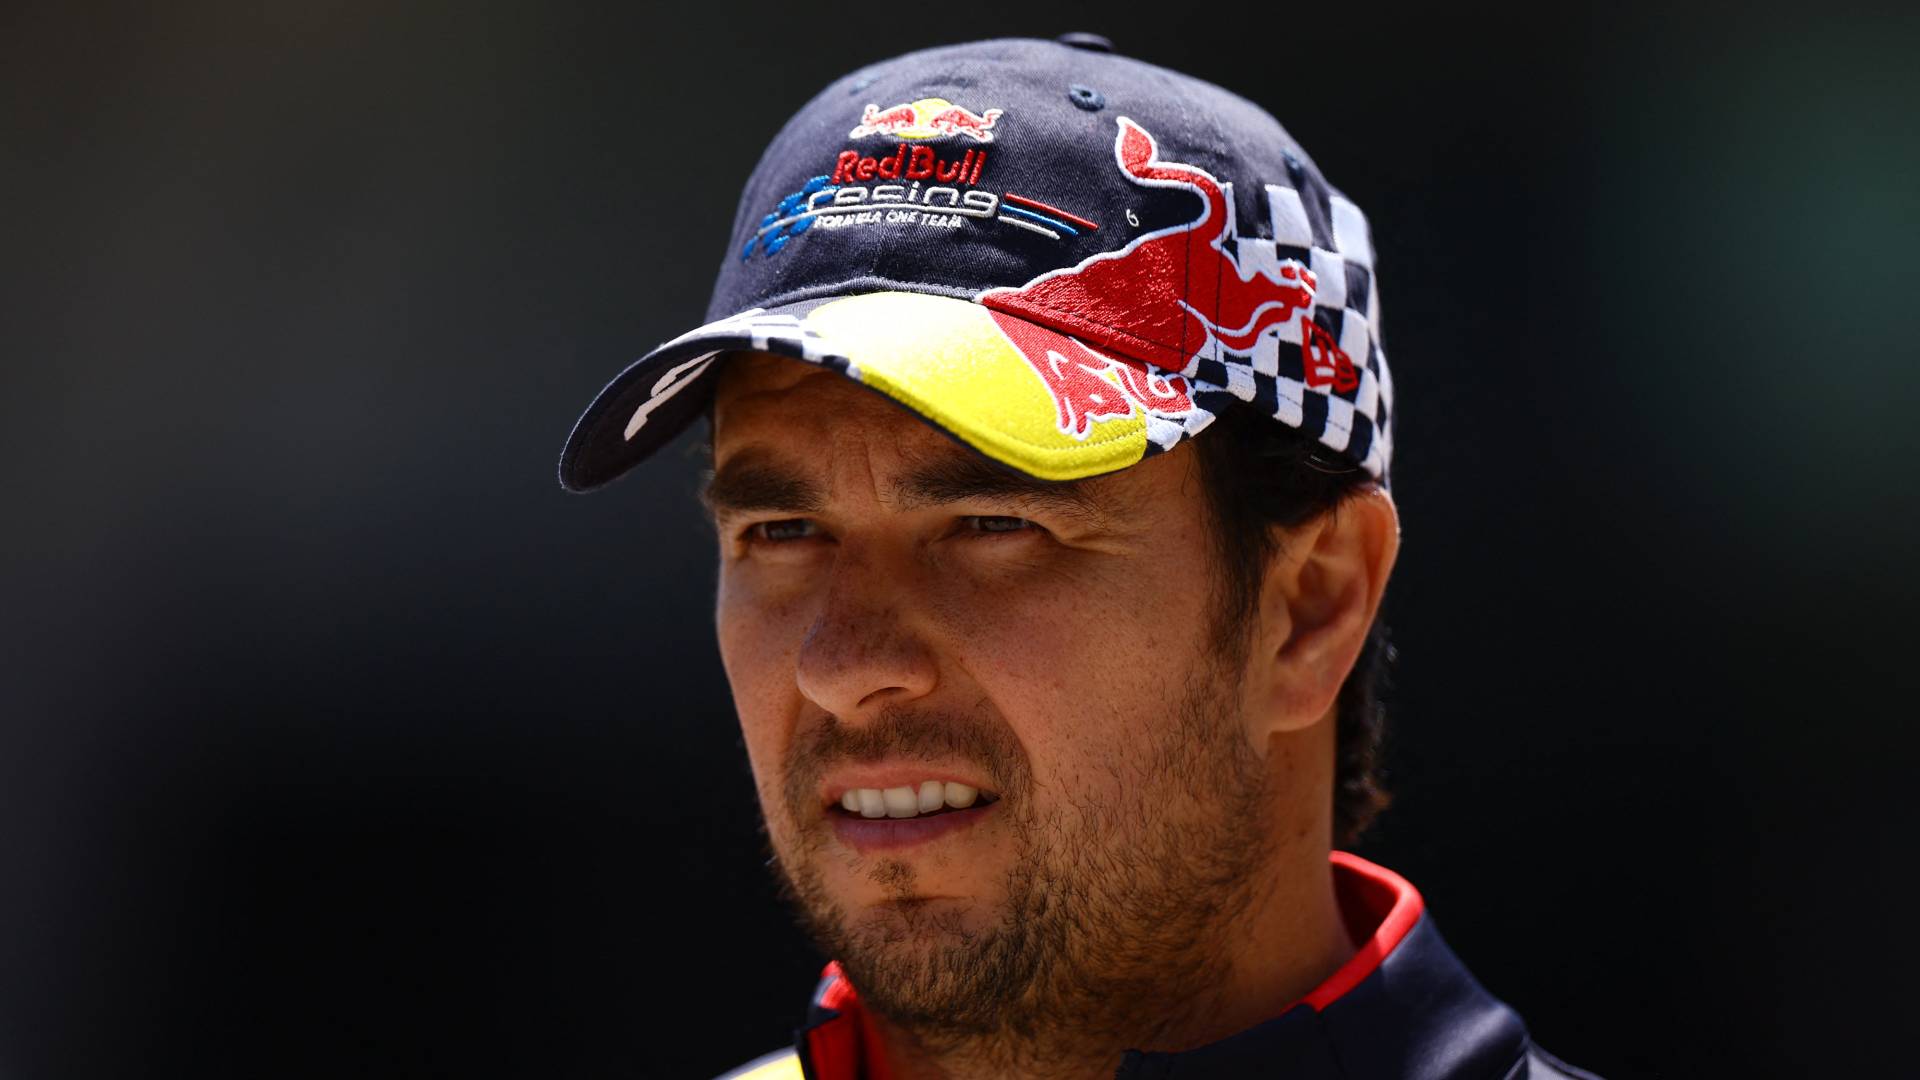 ¿Se va de Red Bull? 'Checo' Pérez plática con directivo de F1 durante GP de China